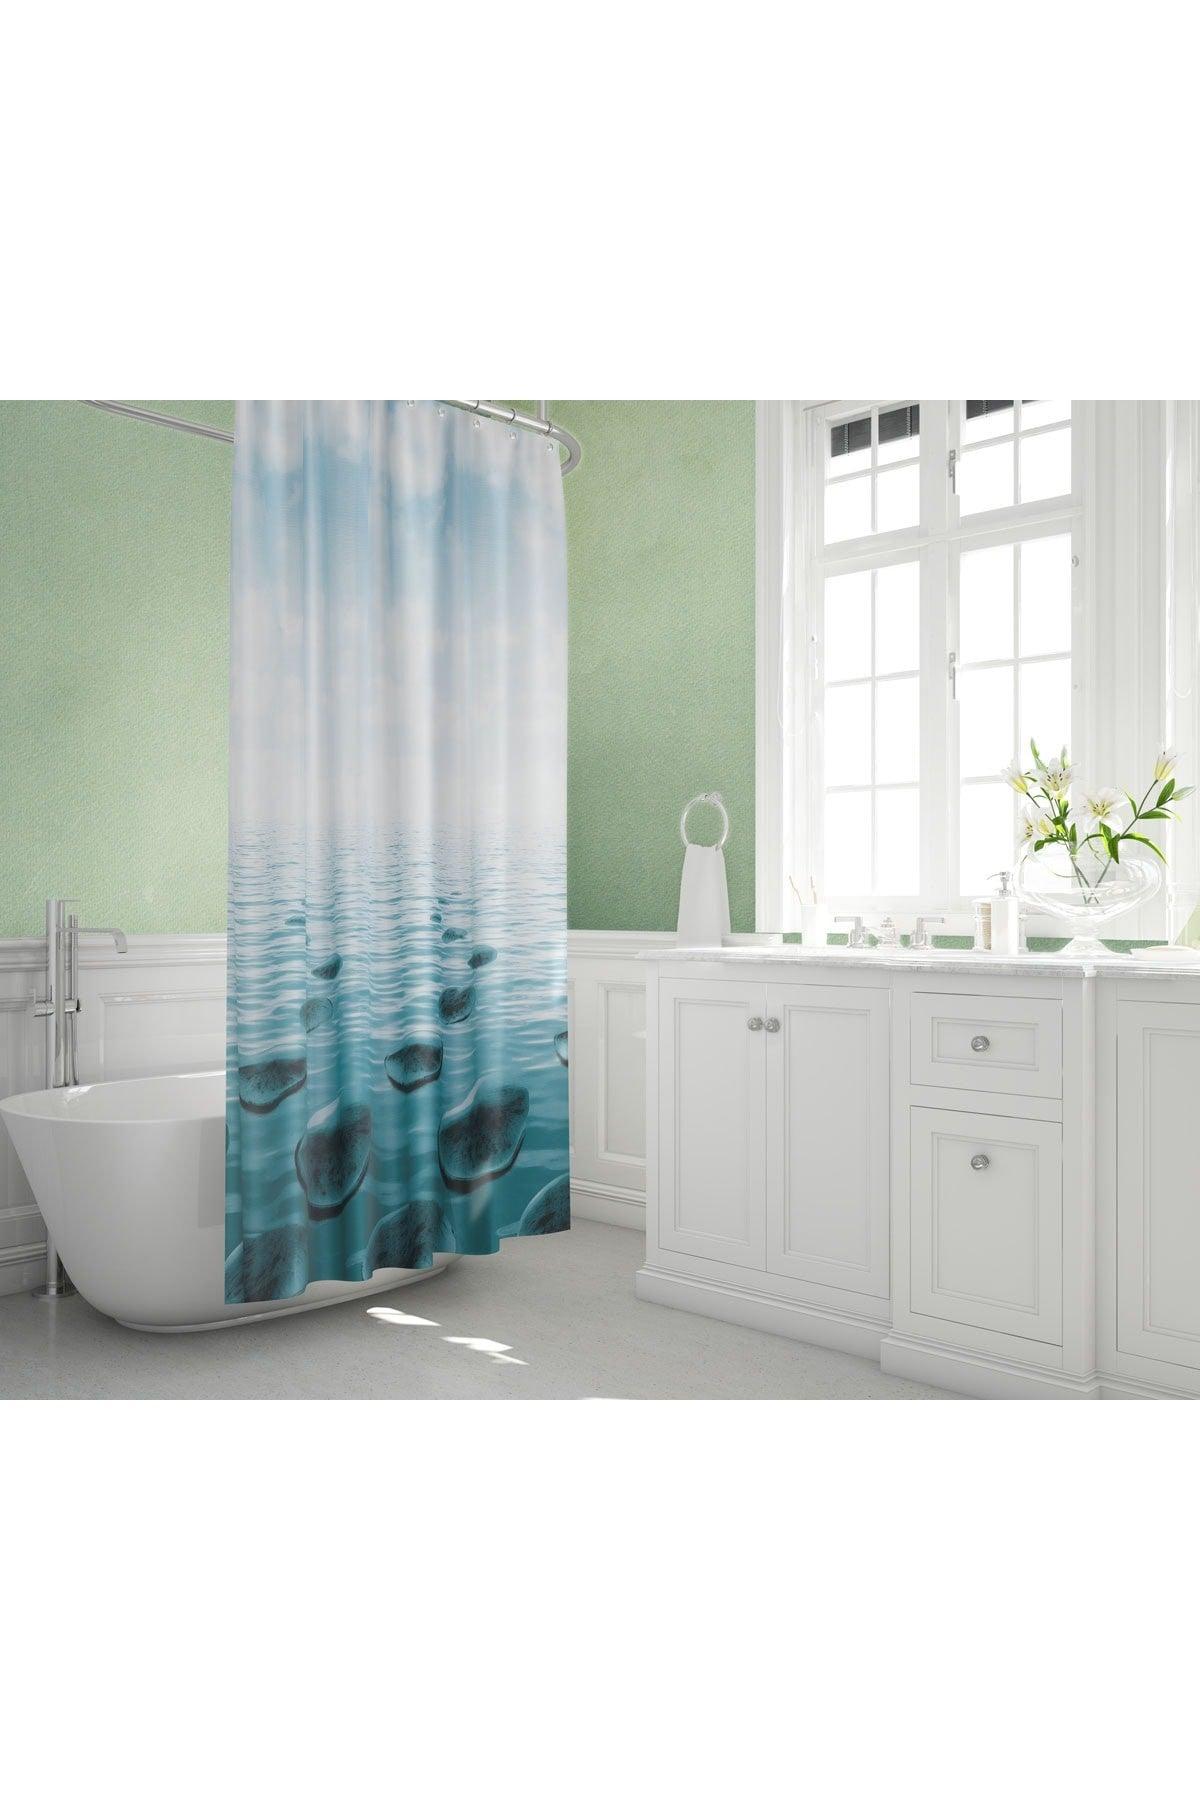 Blue Bathroom Curtain-stone Pattern Colorful Shower Curtain, Single Wing Tub Curtain-180x200cm Bathroom Shower Curtain - Swordslife